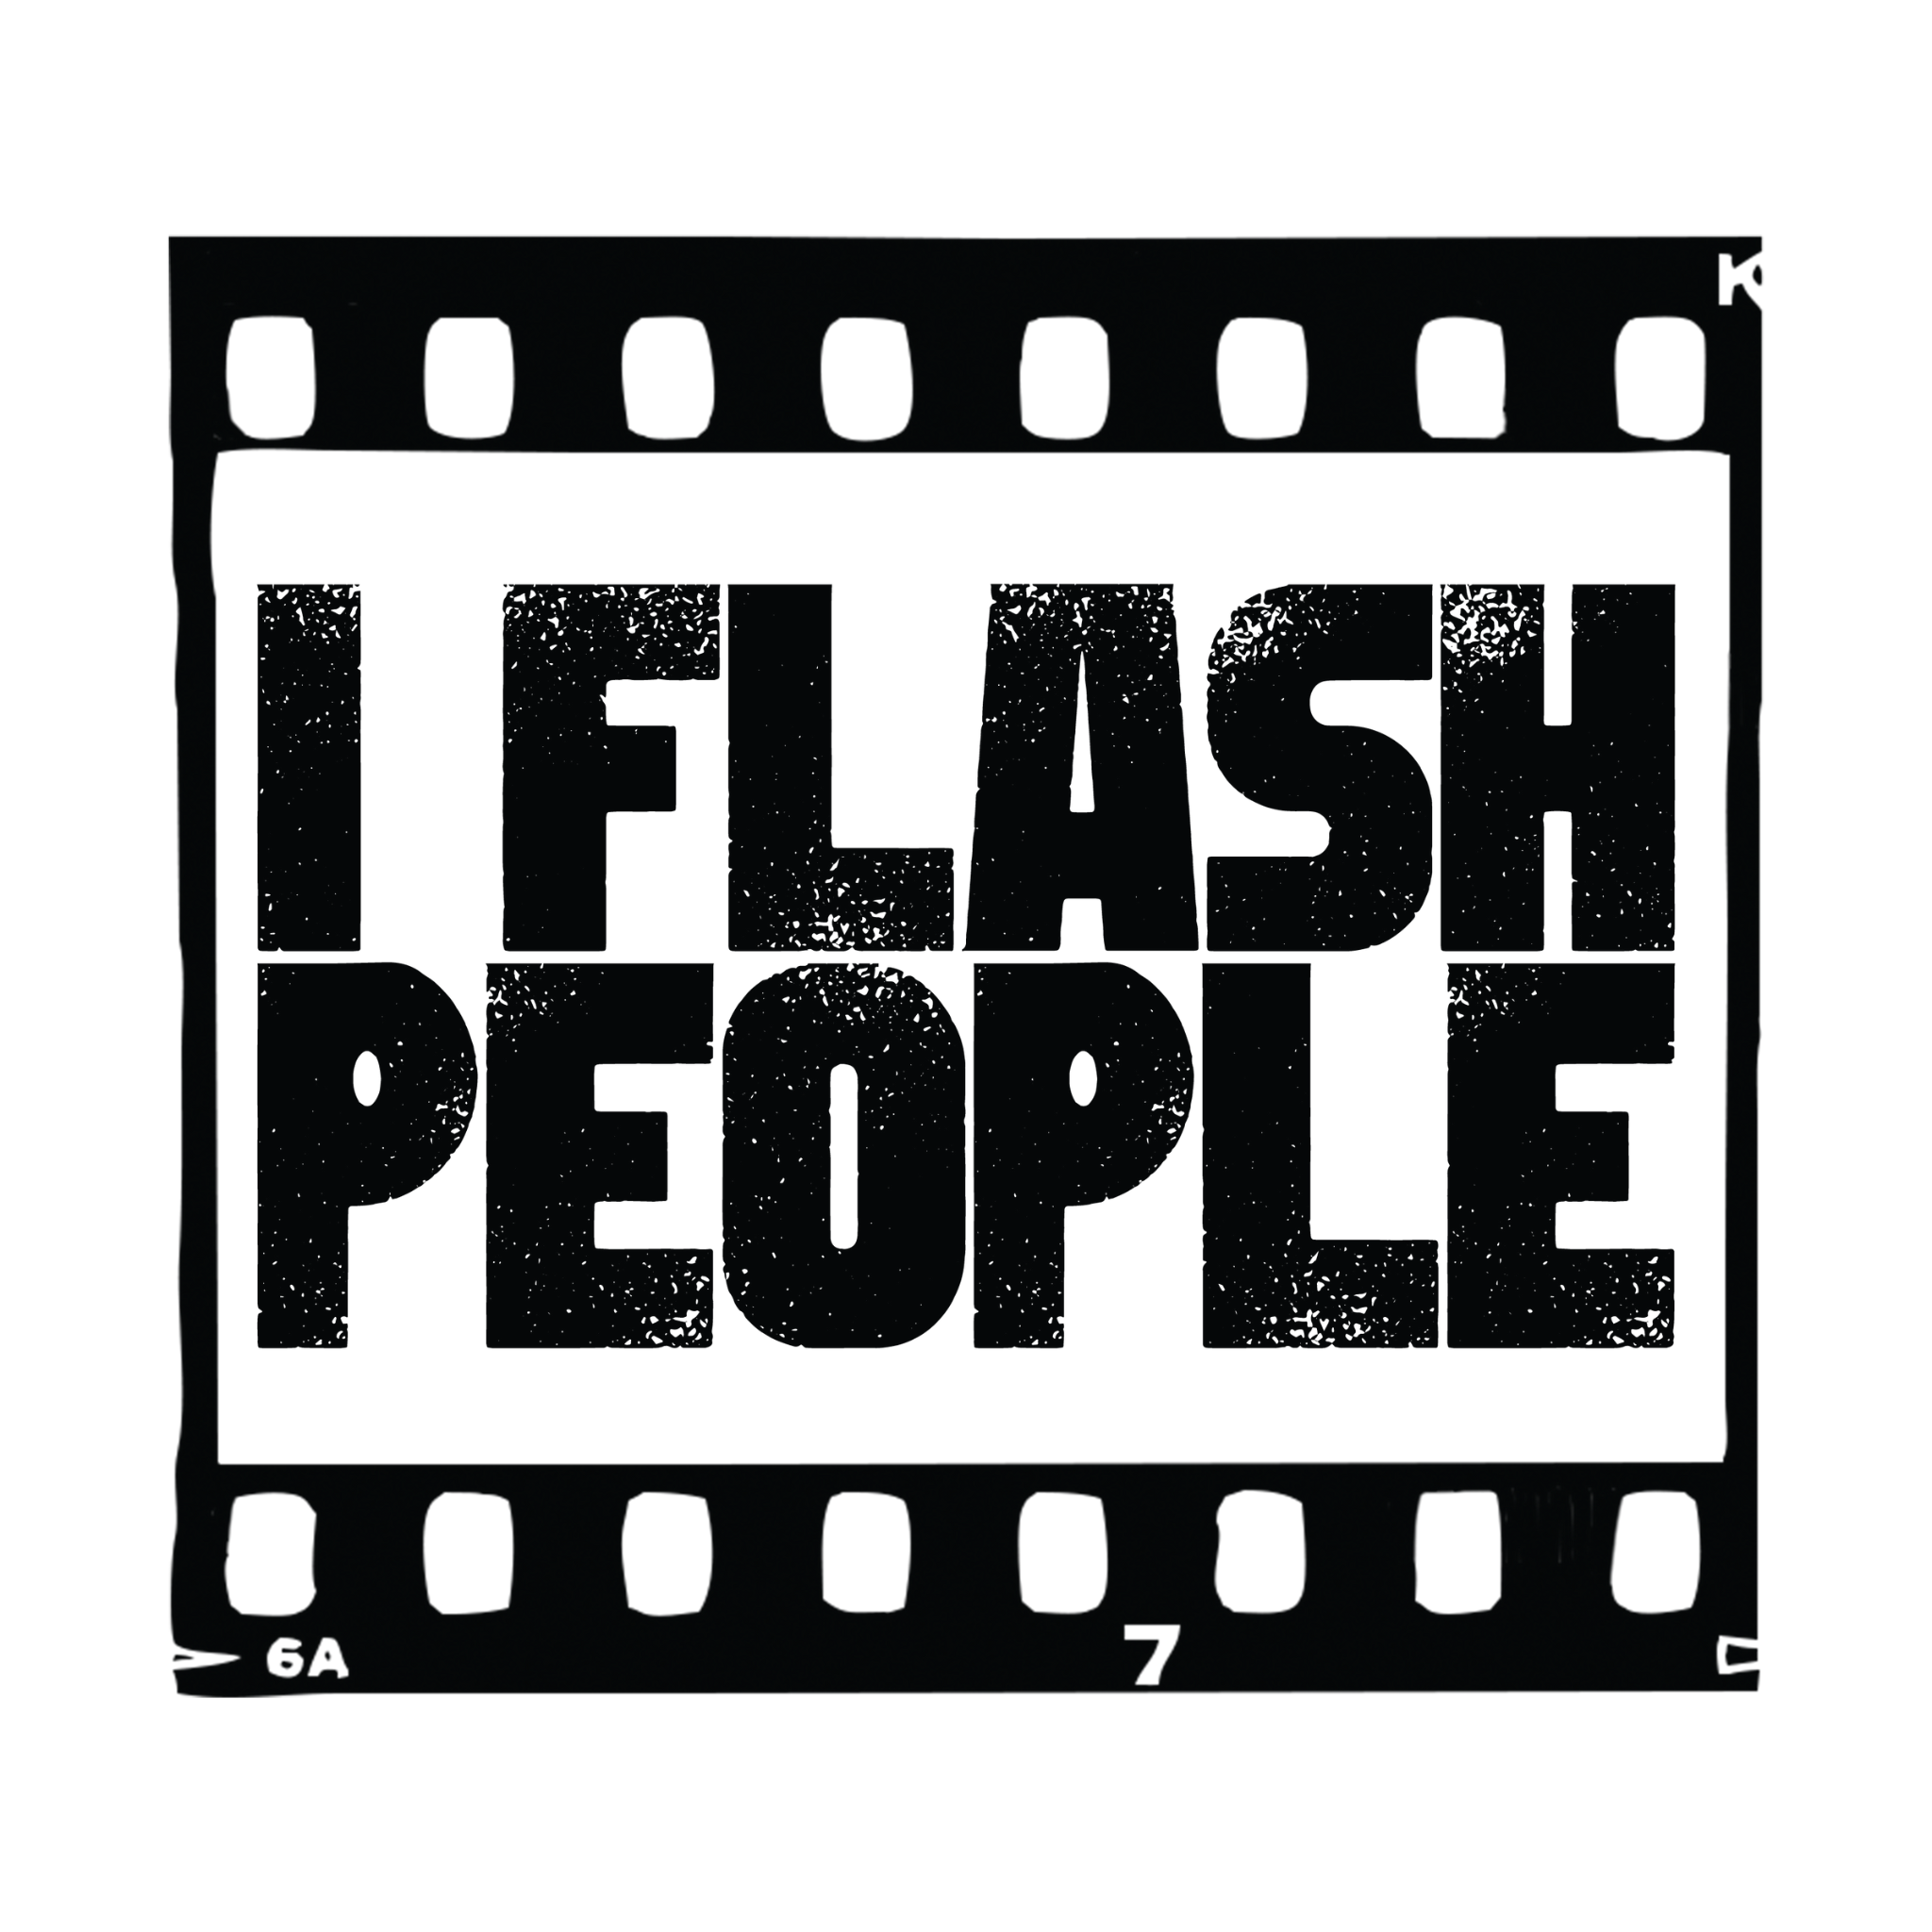 I Flash People T Shirt